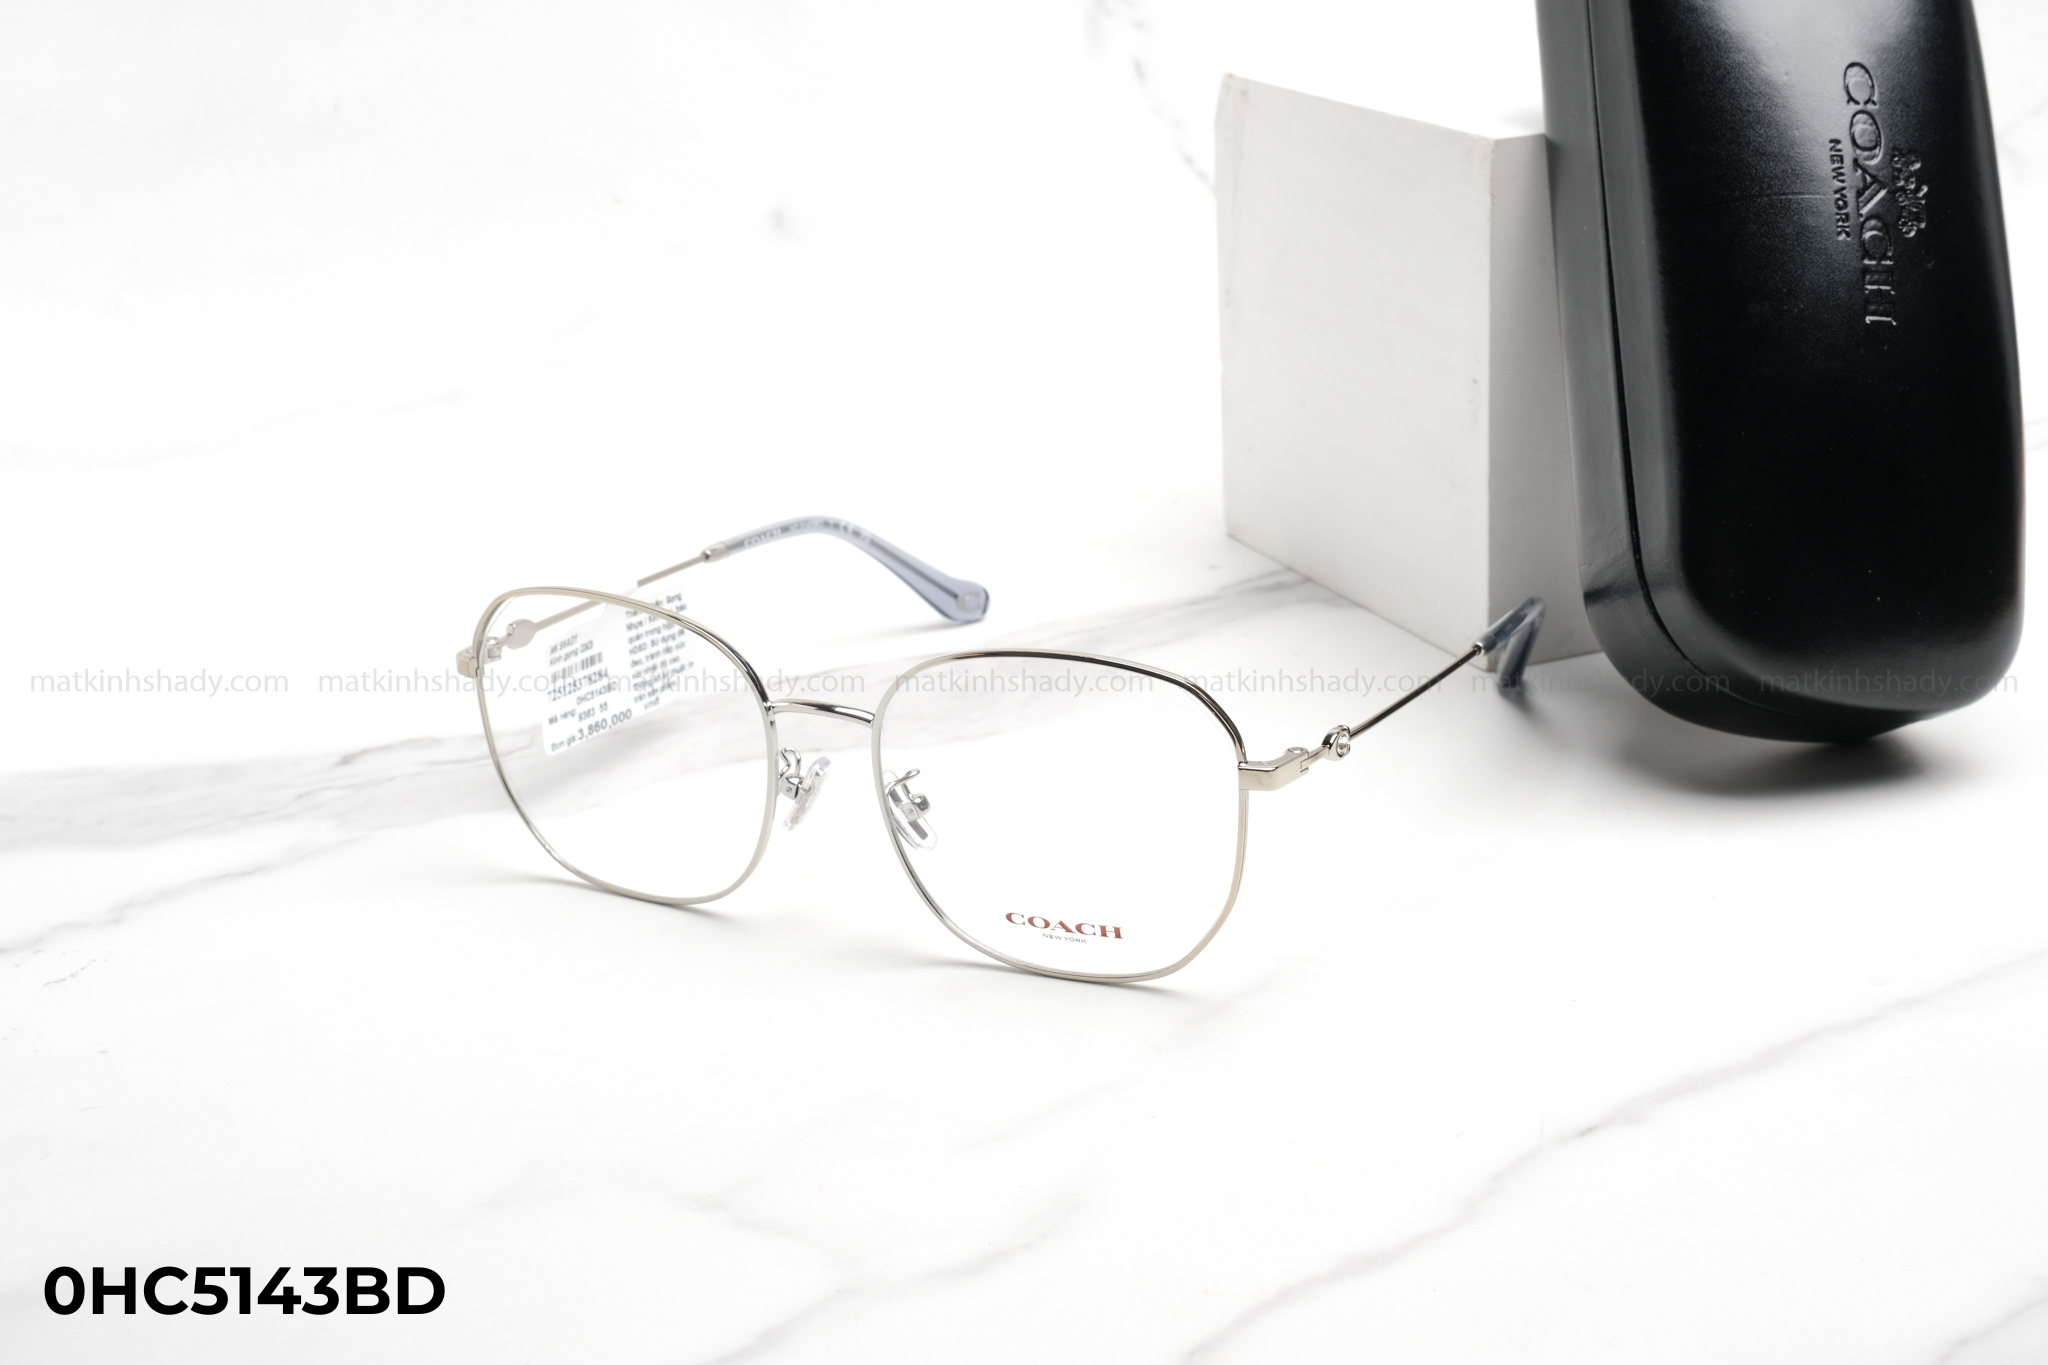  Michael Kors Eyewear - Glasses - 0HC5143BD 